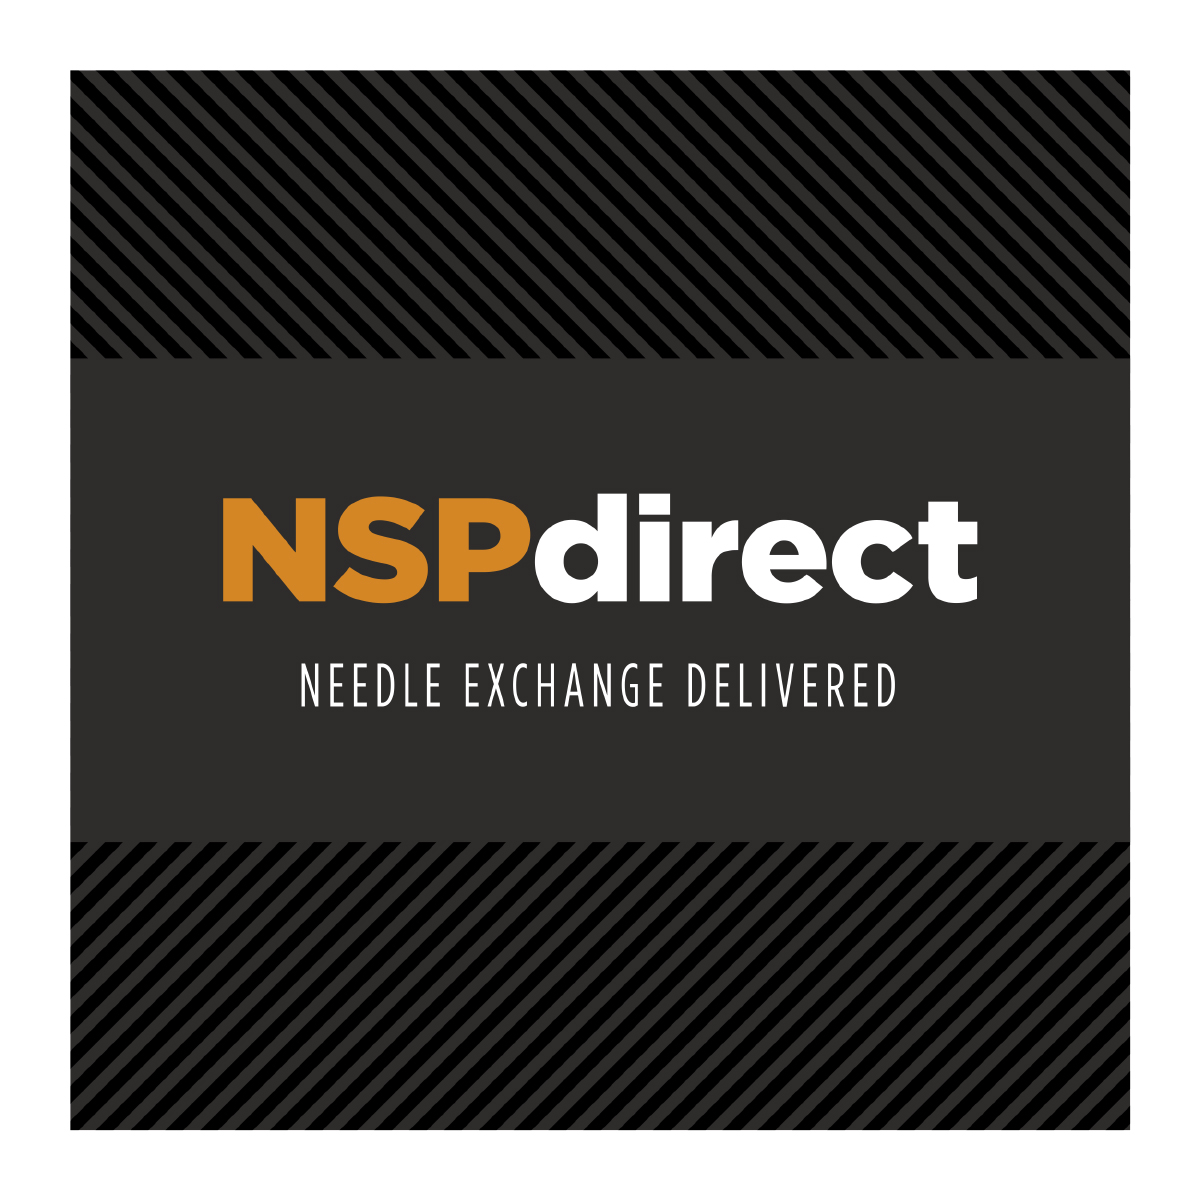 NSPdirect: postal equipment supply